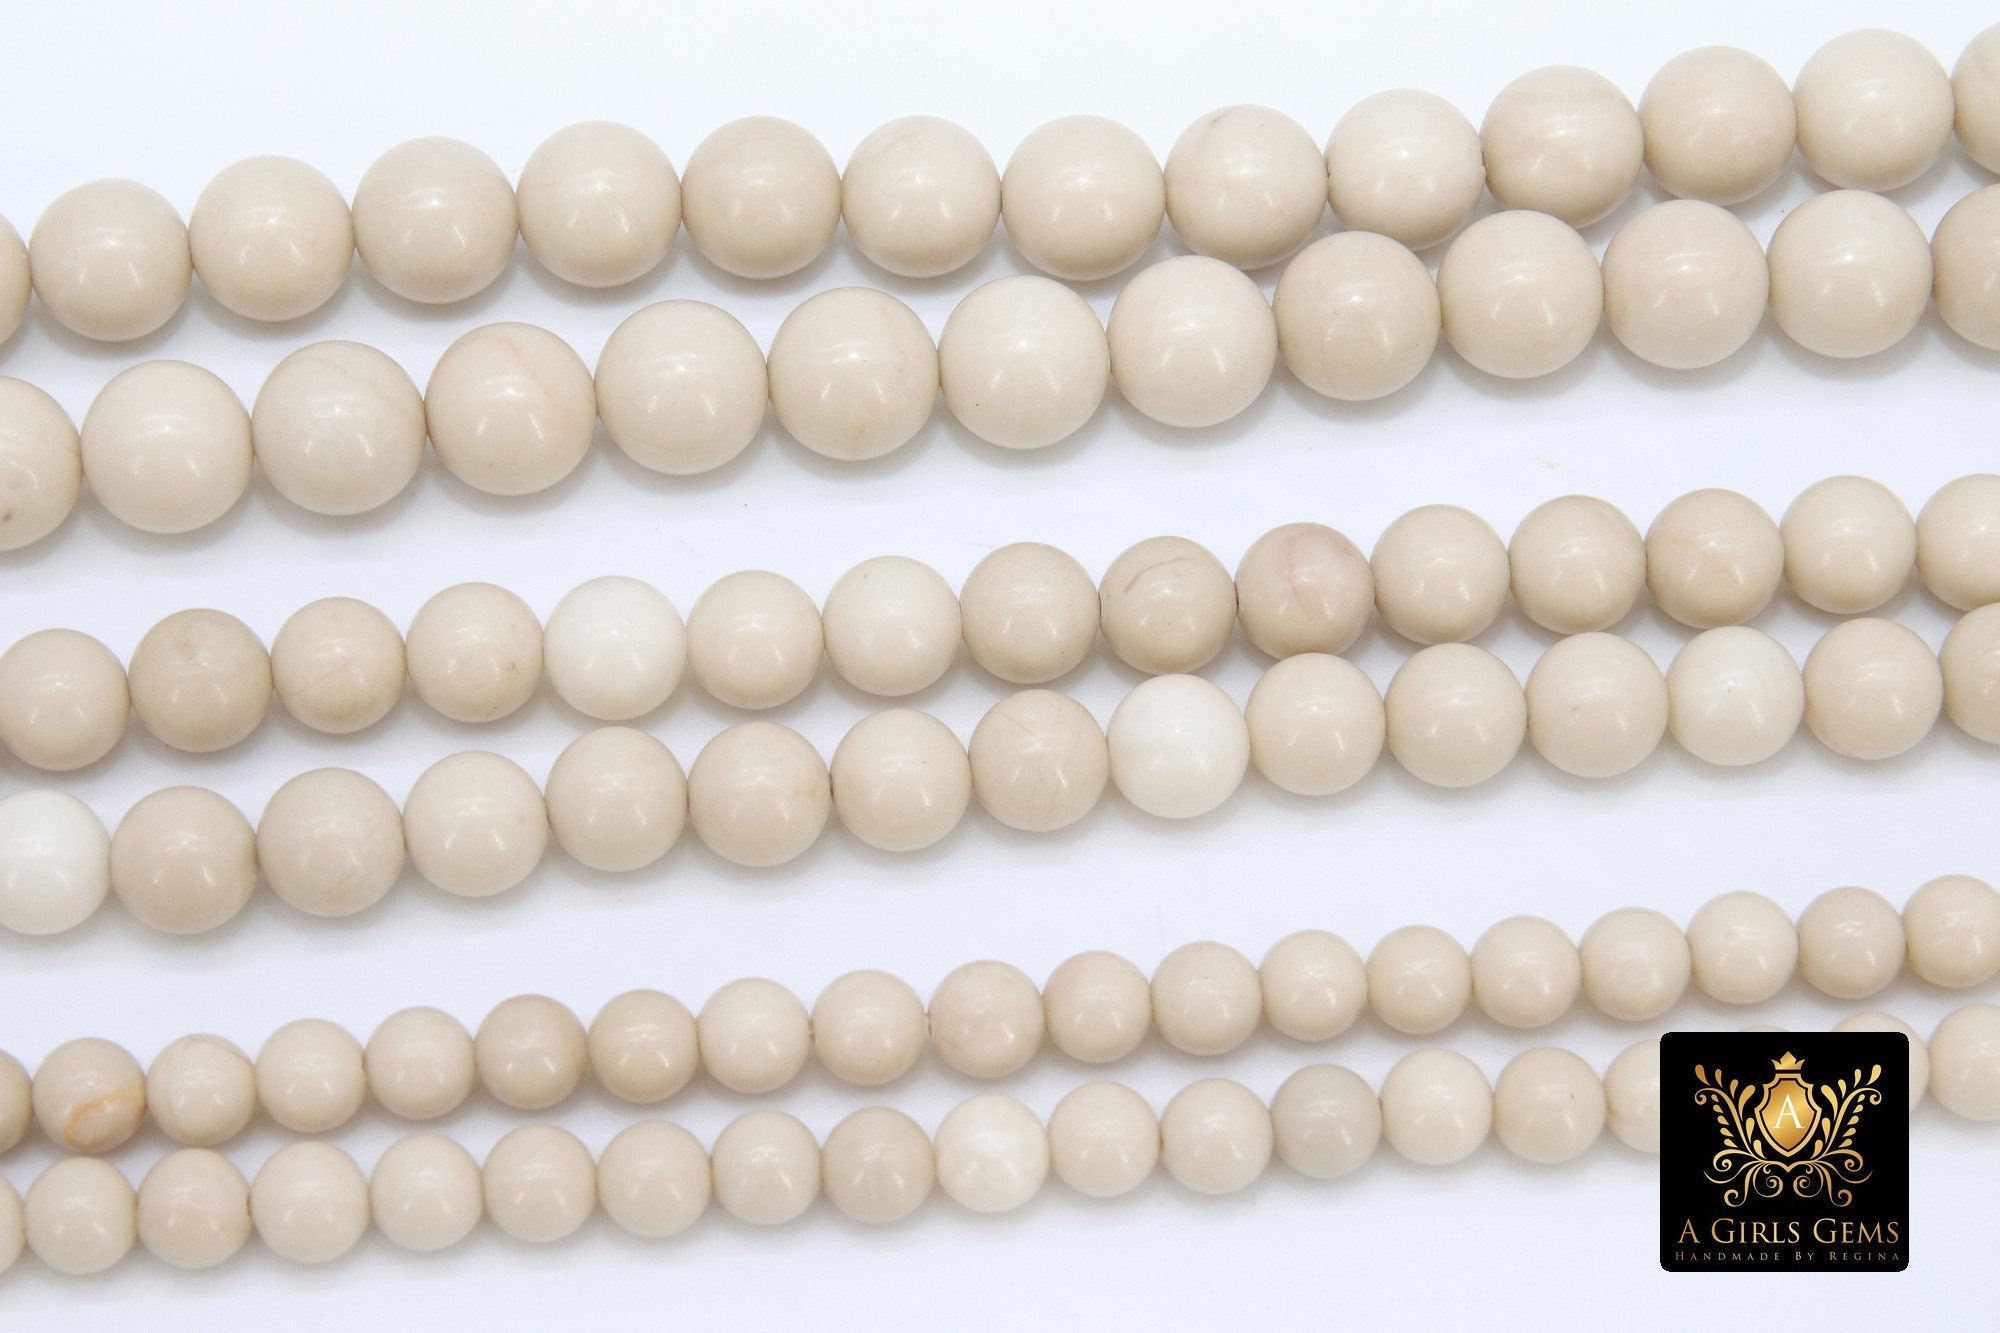 Graduated Natural Shell Beads Tans Creams 30 Inch Strand 3675